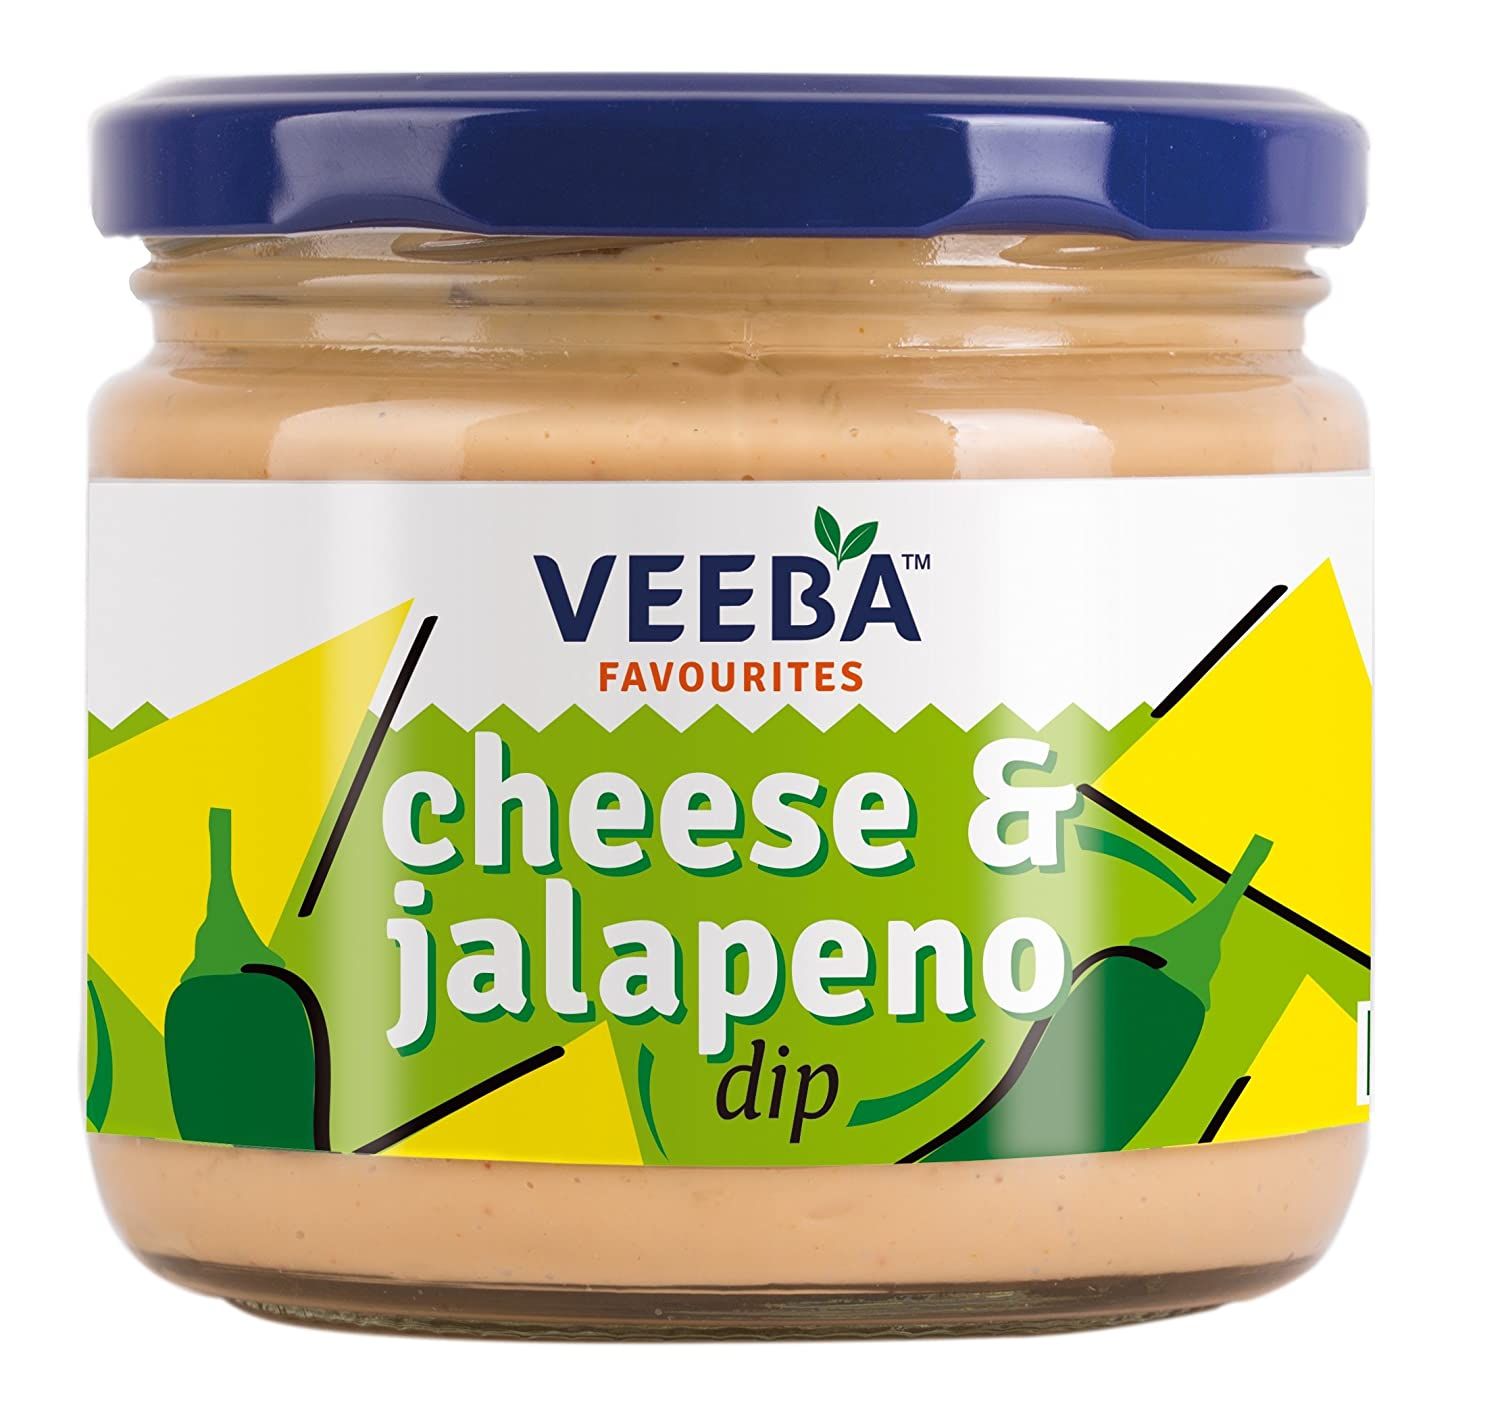 Veeba Cheese and Jalapeno Dip Image